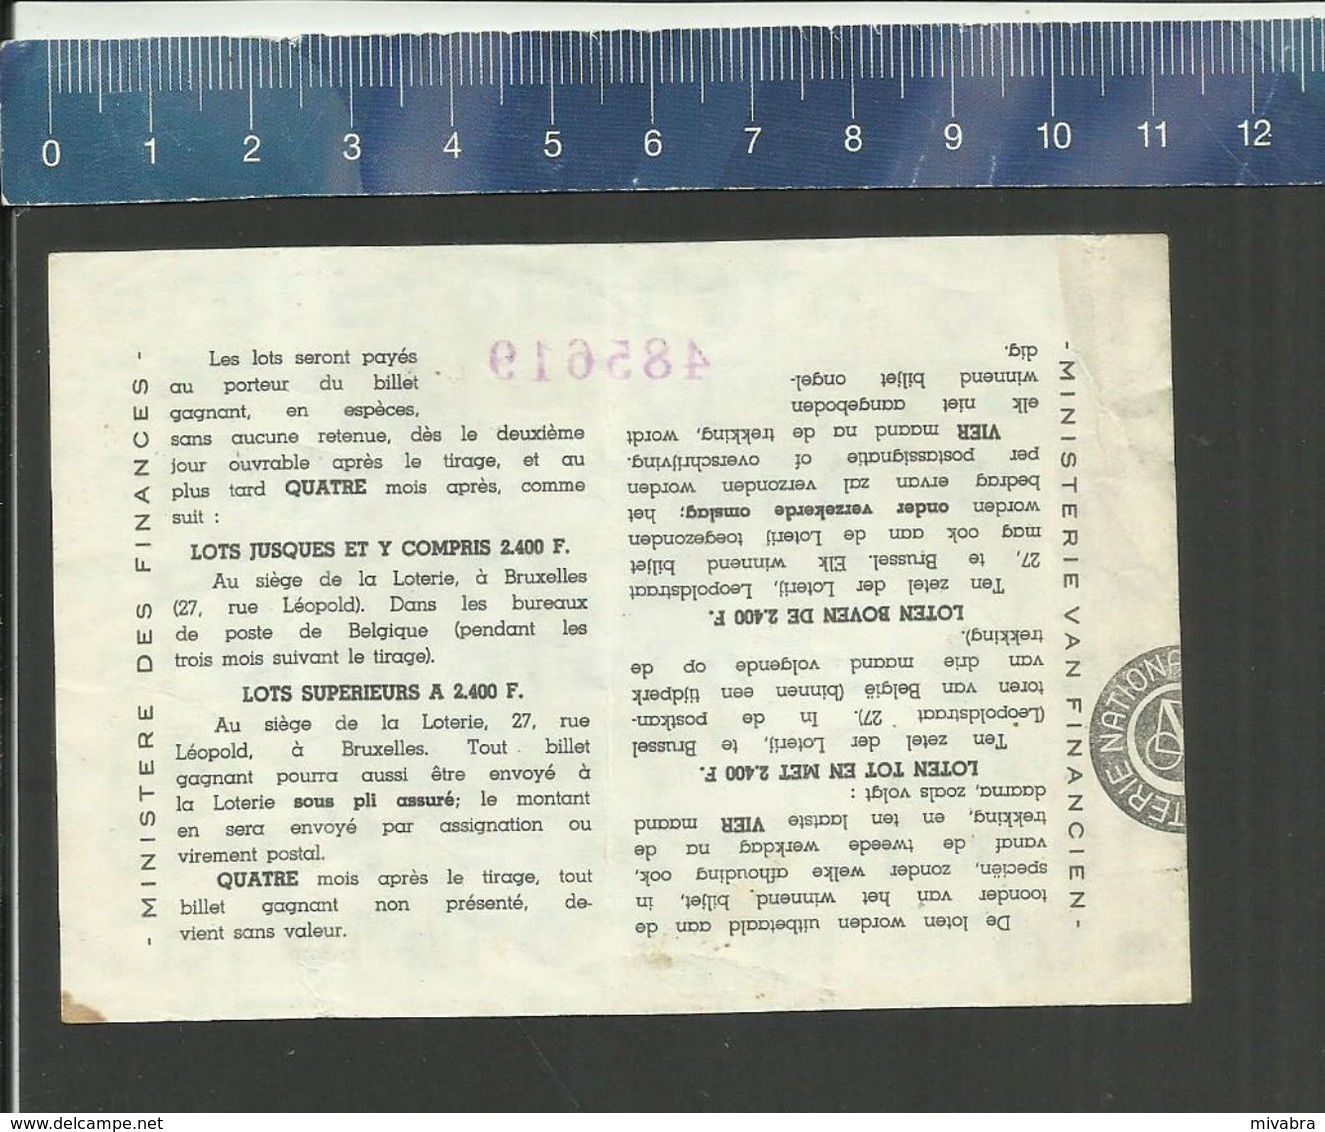 NATIONALE LOTERIJ - LOTERIE NATIONALE 1964 NEDERBRAKEL - Billets De Loterie